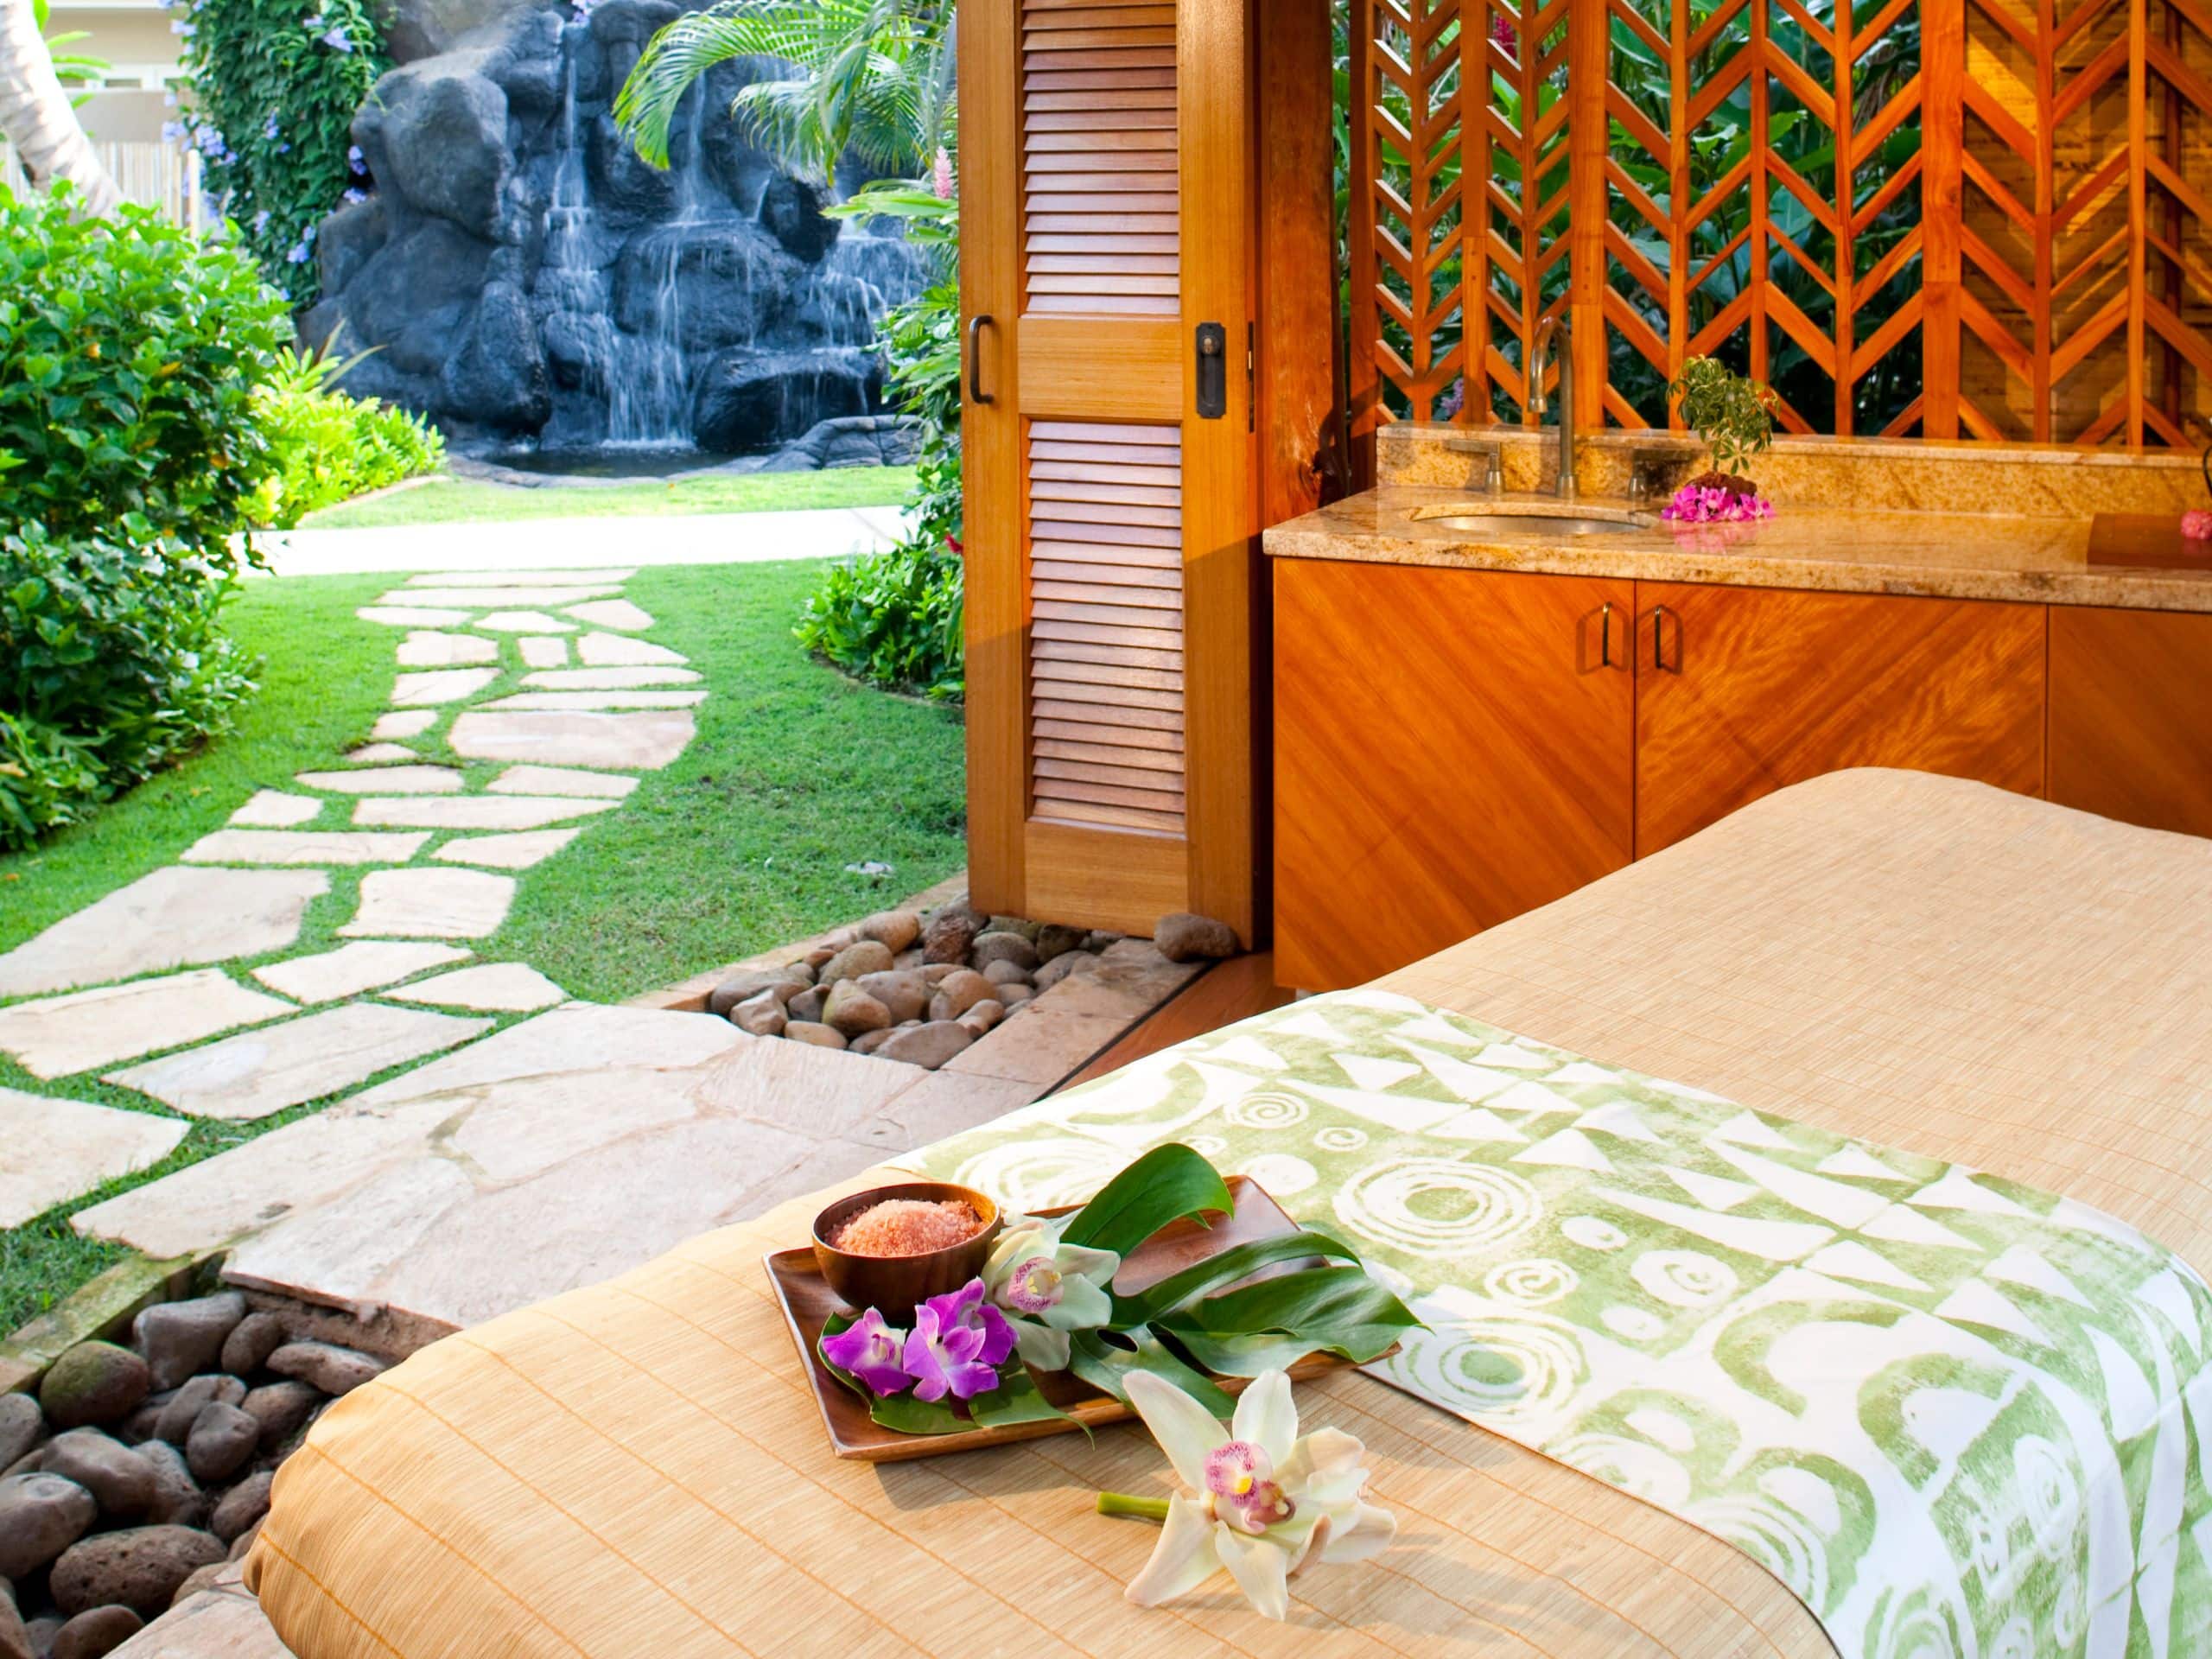 Anara Spa Garden Treatment Room at Grand Hyatt Kauai